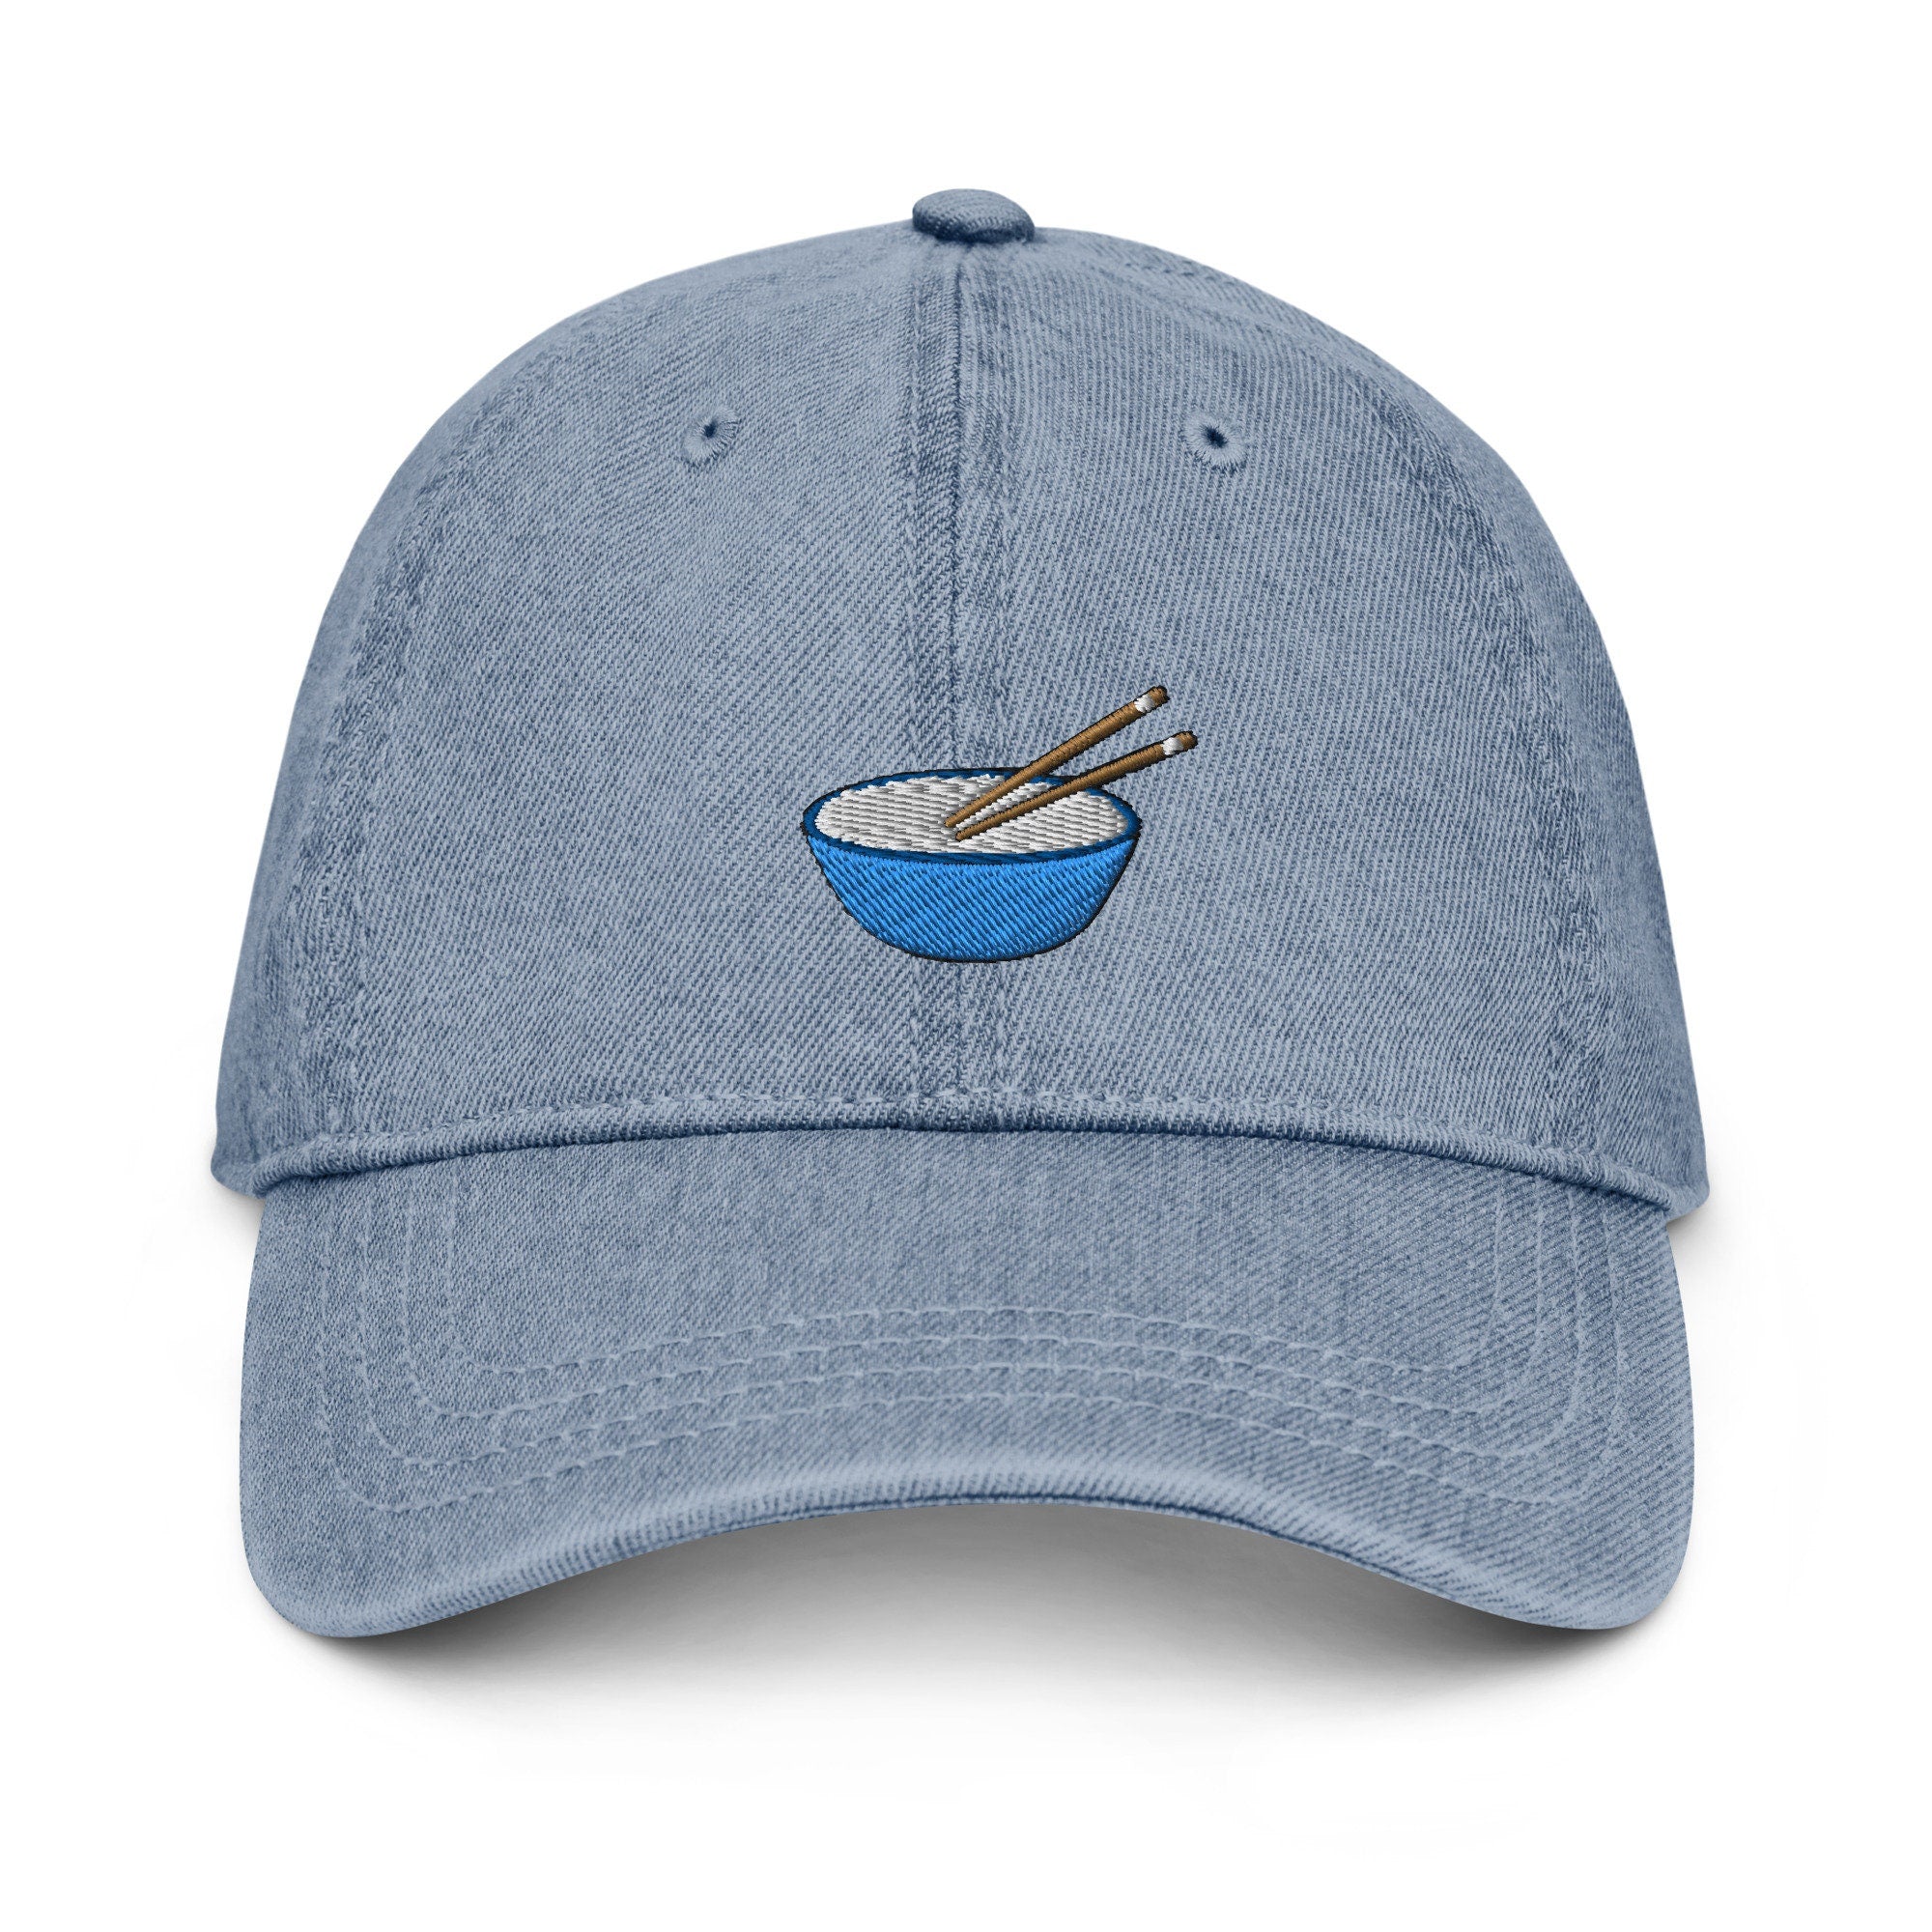 Rice Bowl Denim Hat, Premium Embroidered Denim Cap, Hat Embroidery Gift - Multiple Colors